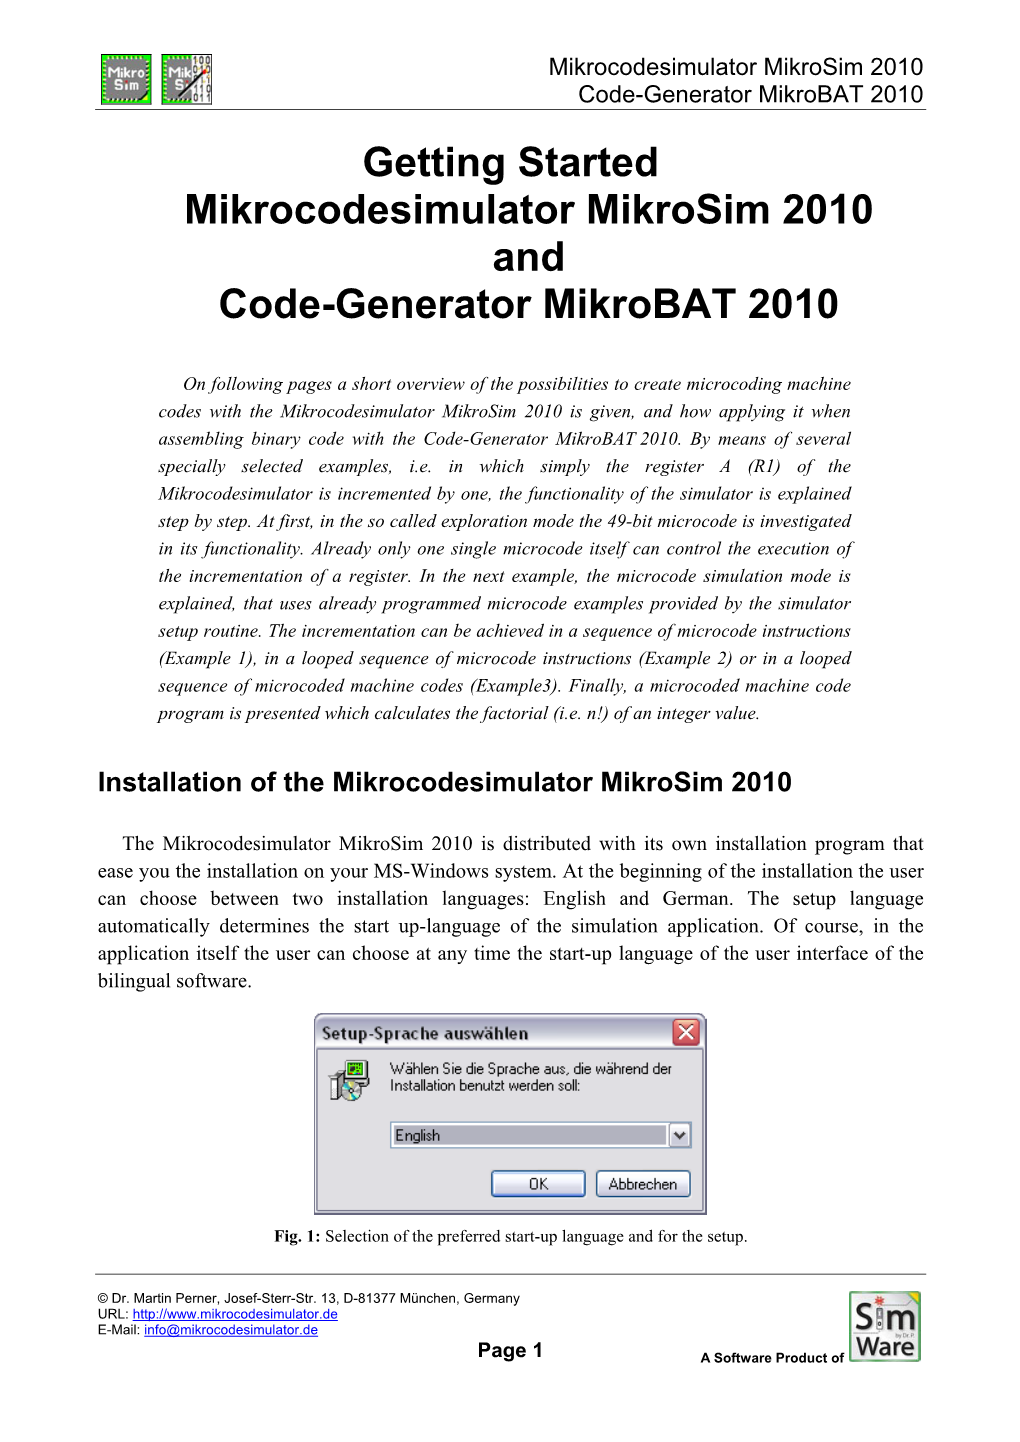 Getting Started Mikrocodesimulator Mikrosim 2010 and Code-Generator Mikrobat 2010